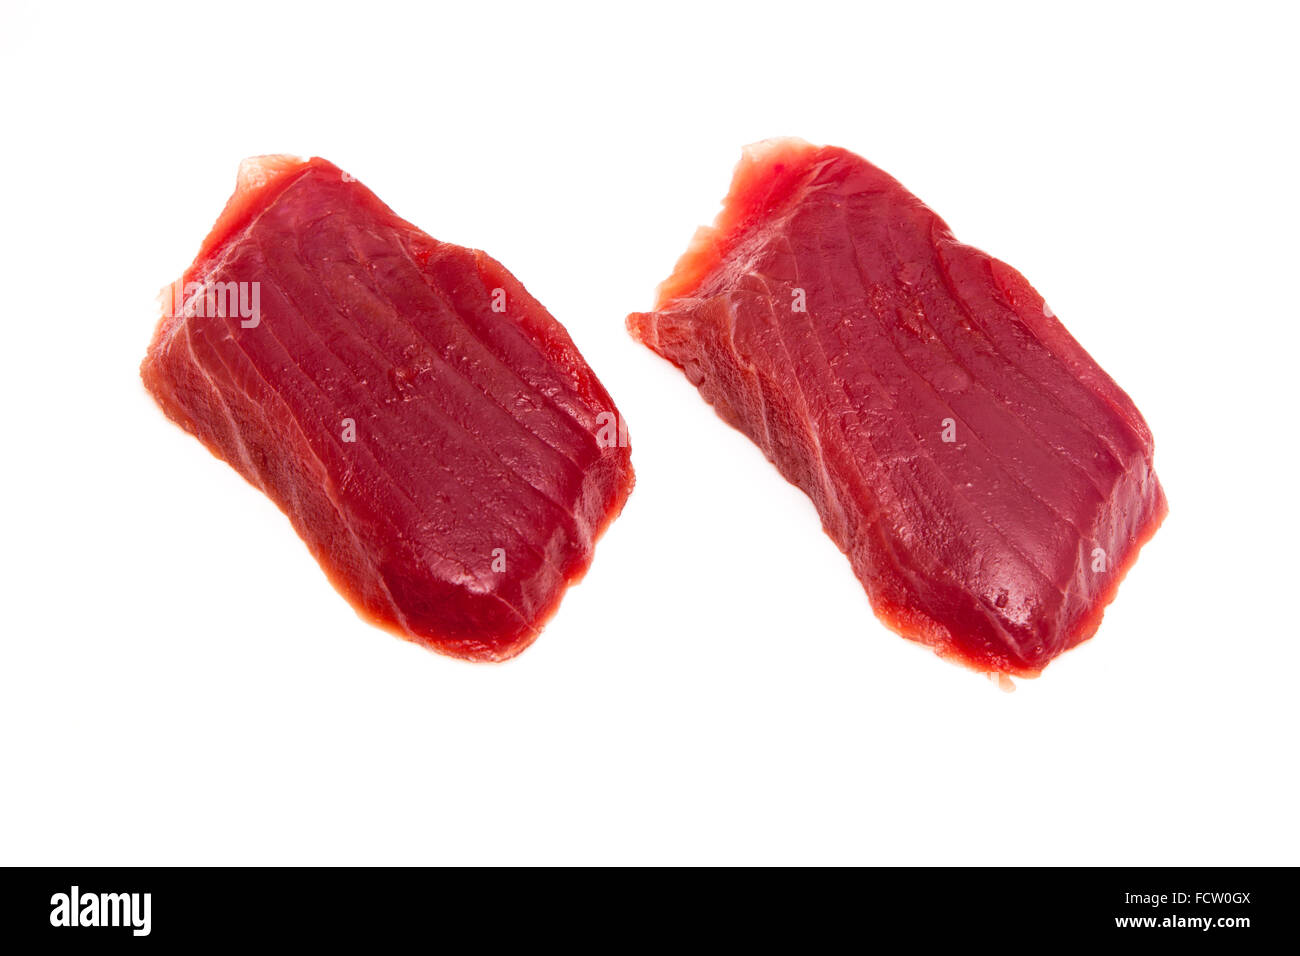 Yellowfin tuna fish steaks (thunnus albacares) isolated on a white studio background. Stock Photo